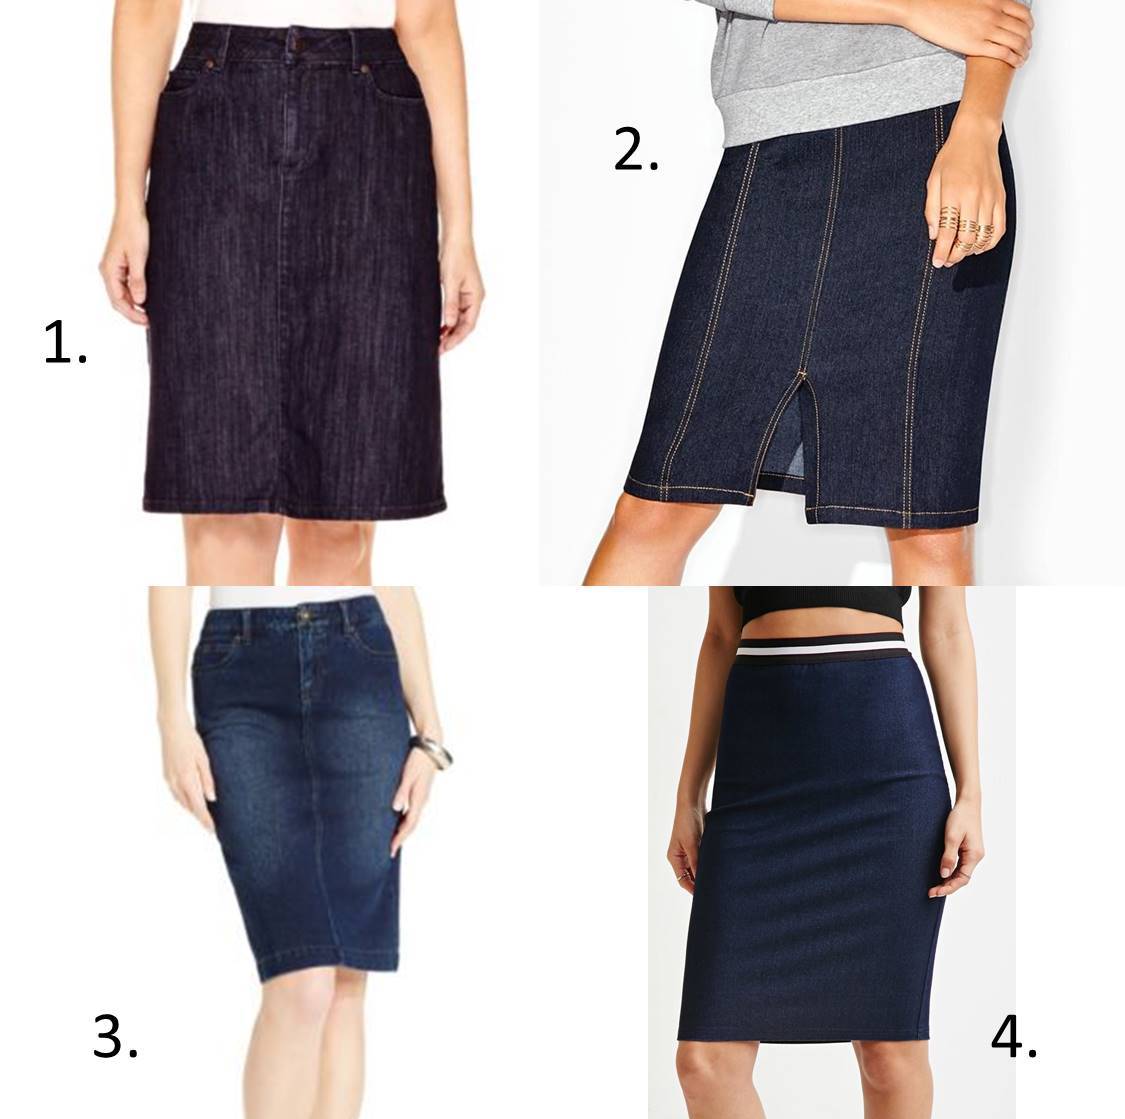 Erica's Fashion & Beauty: My Style: Denim Skirt Edition